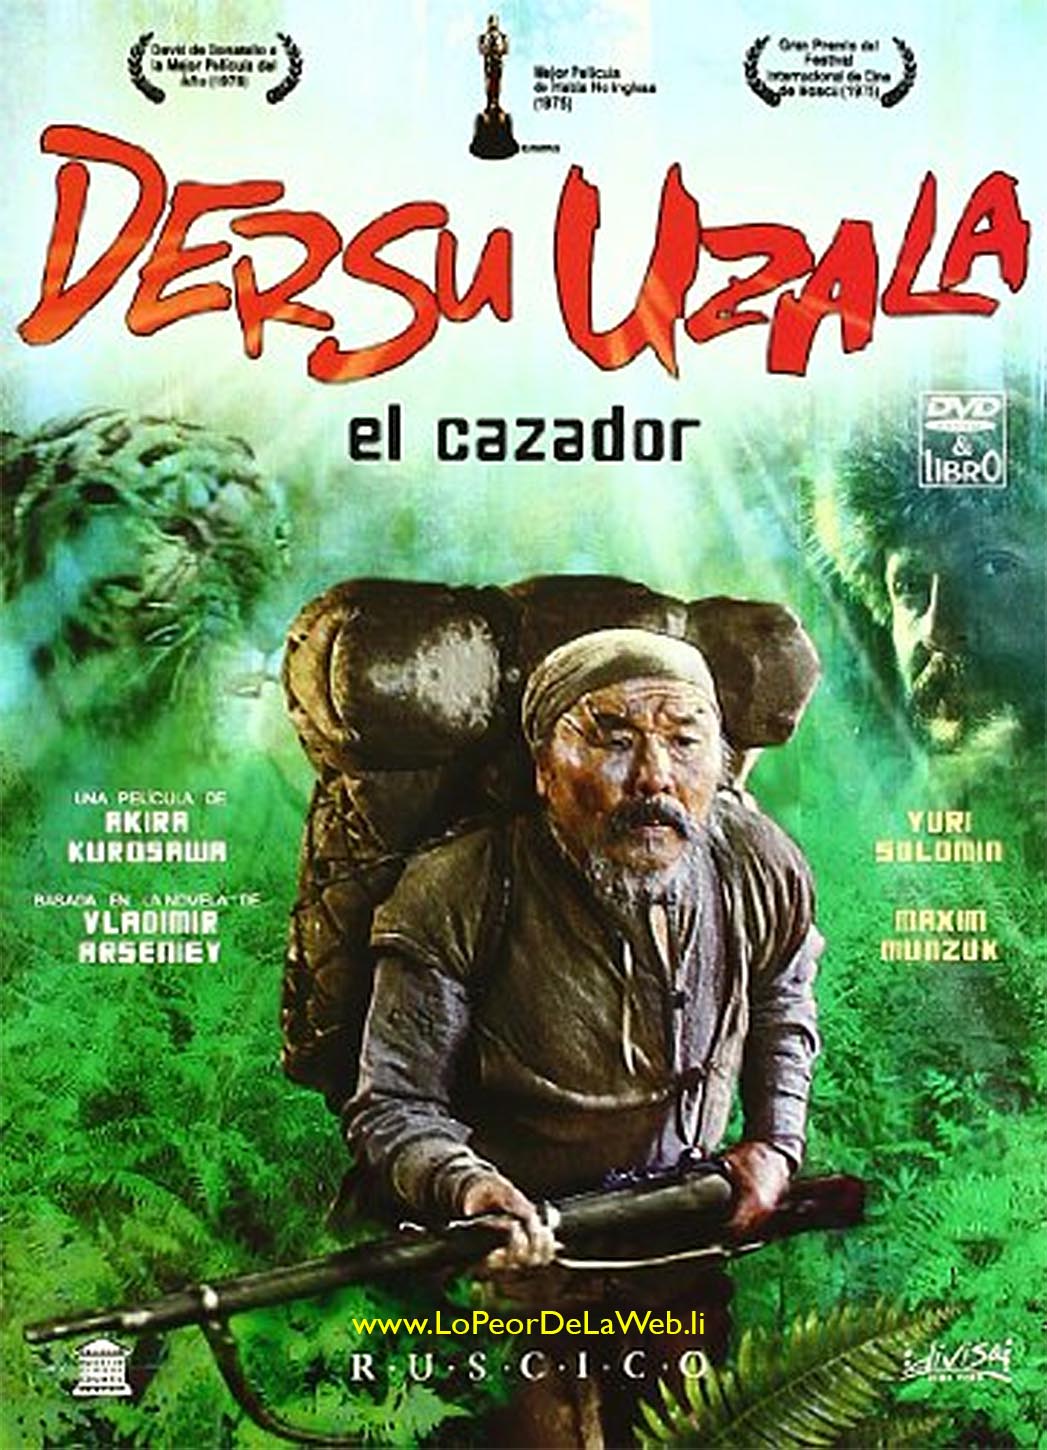 El Cazador (1975 - Dersu Uzala - Akira Kurosawa)